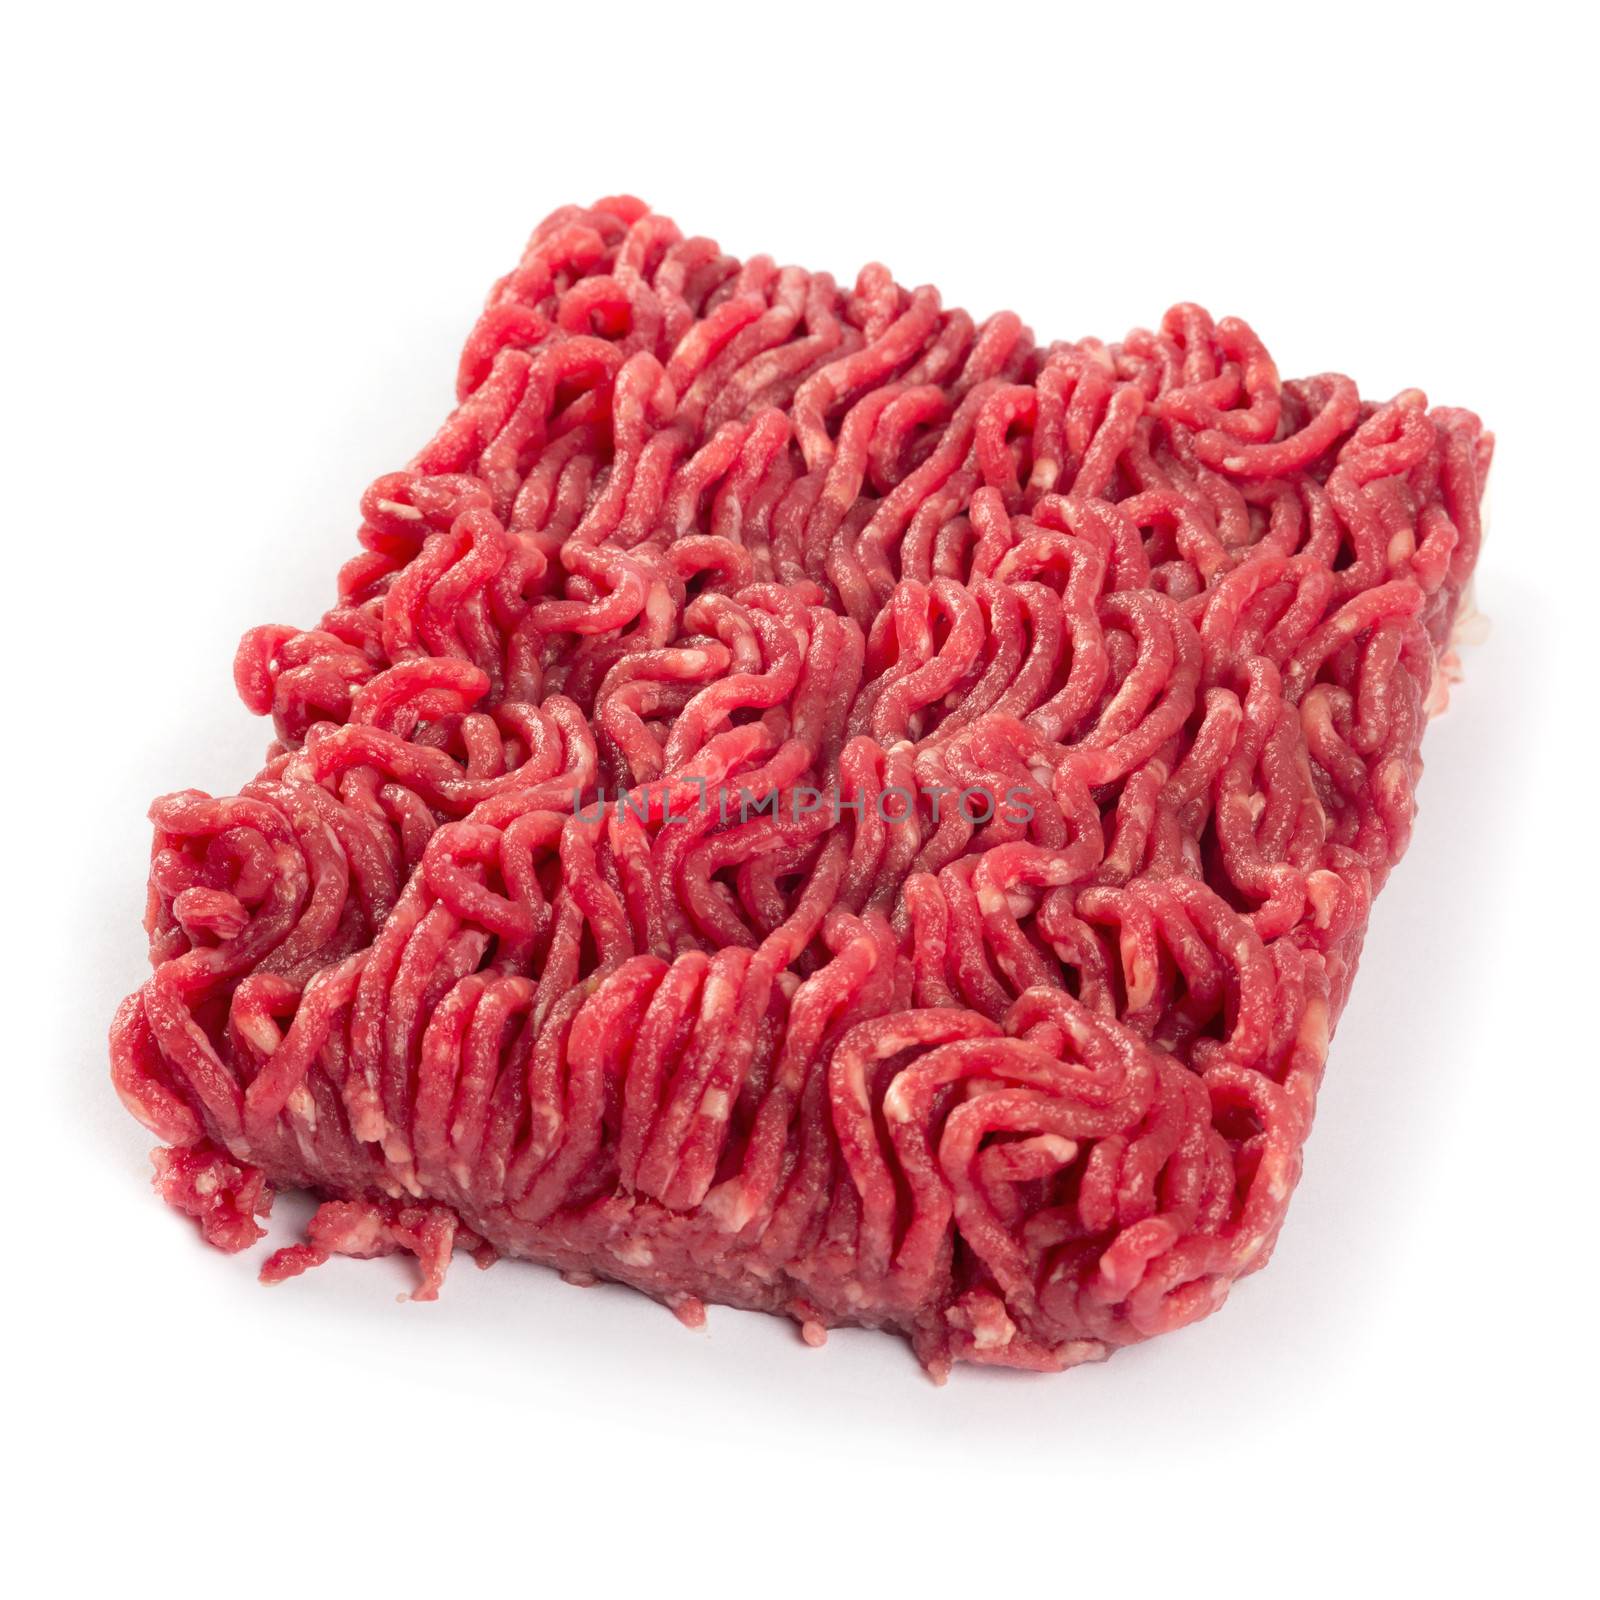 Photo of fresh ground beef on white background.